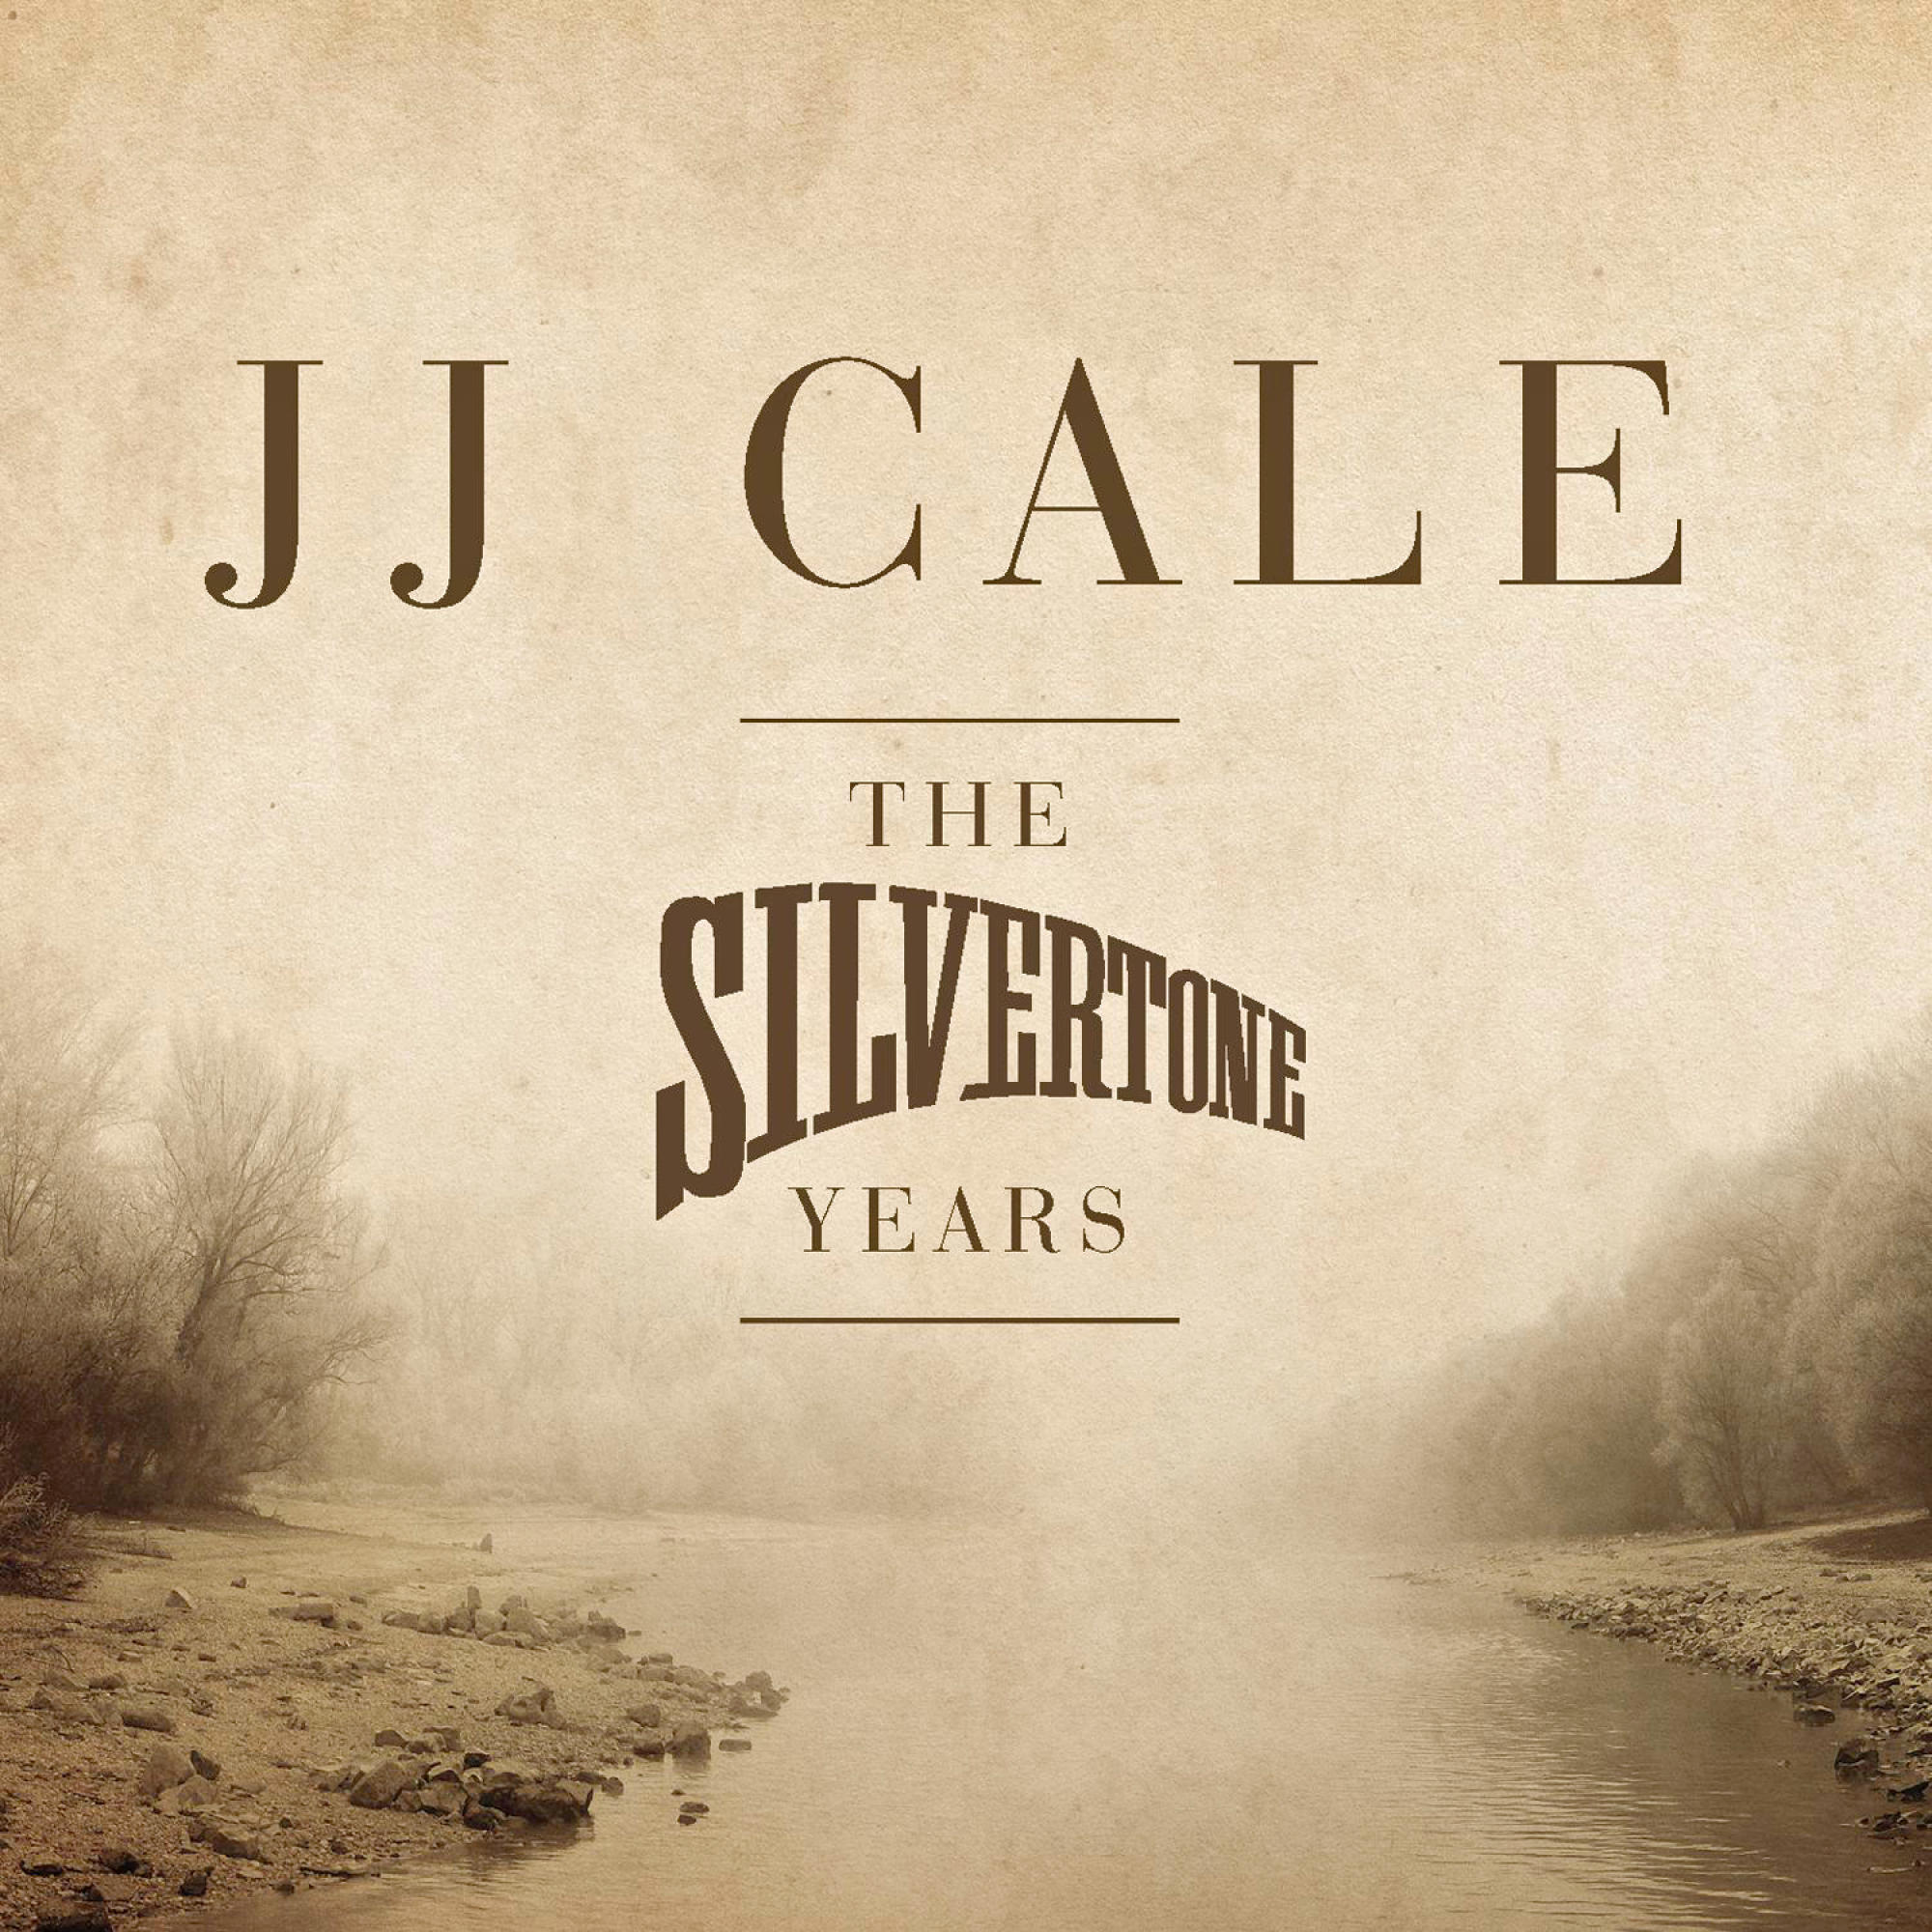 J.J. Cale - Years (CD) Silvertone - The